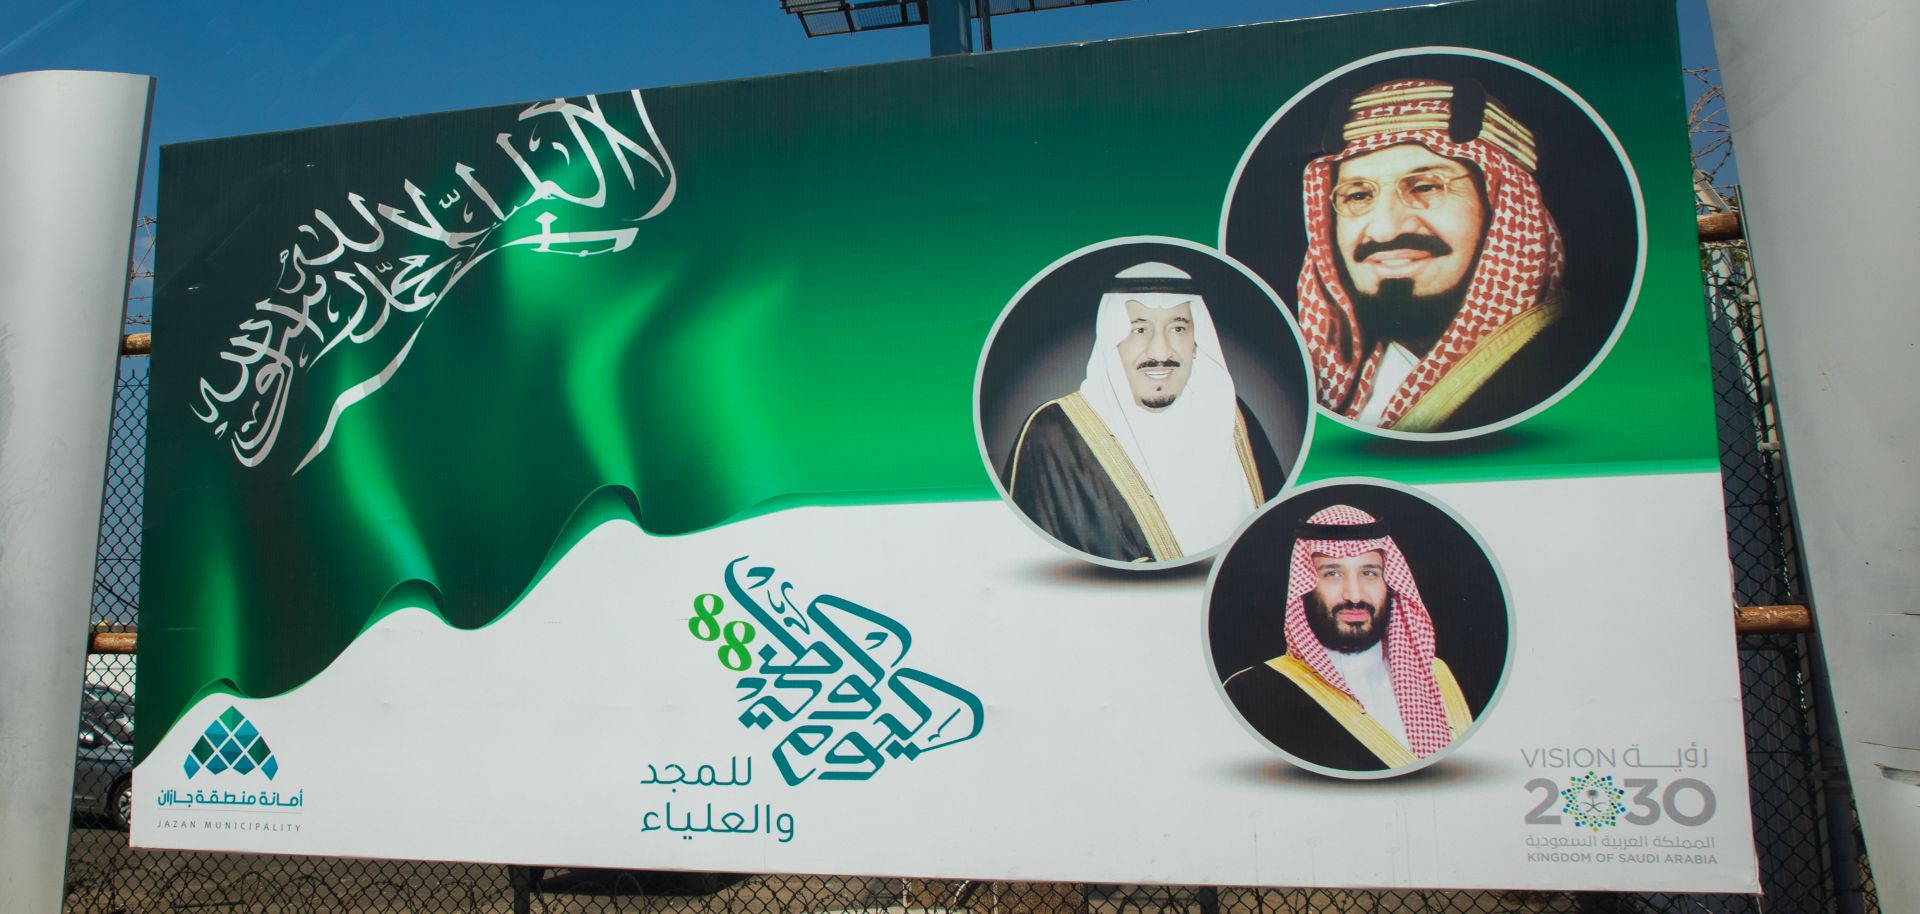 Saudi Crown Prince Mohammed bin Salman (bottom image) and King Salman (left) look out from a billboard promoting Vision 2030 in Jizan, Saudi Arabia, on Dec. 16, 2018.